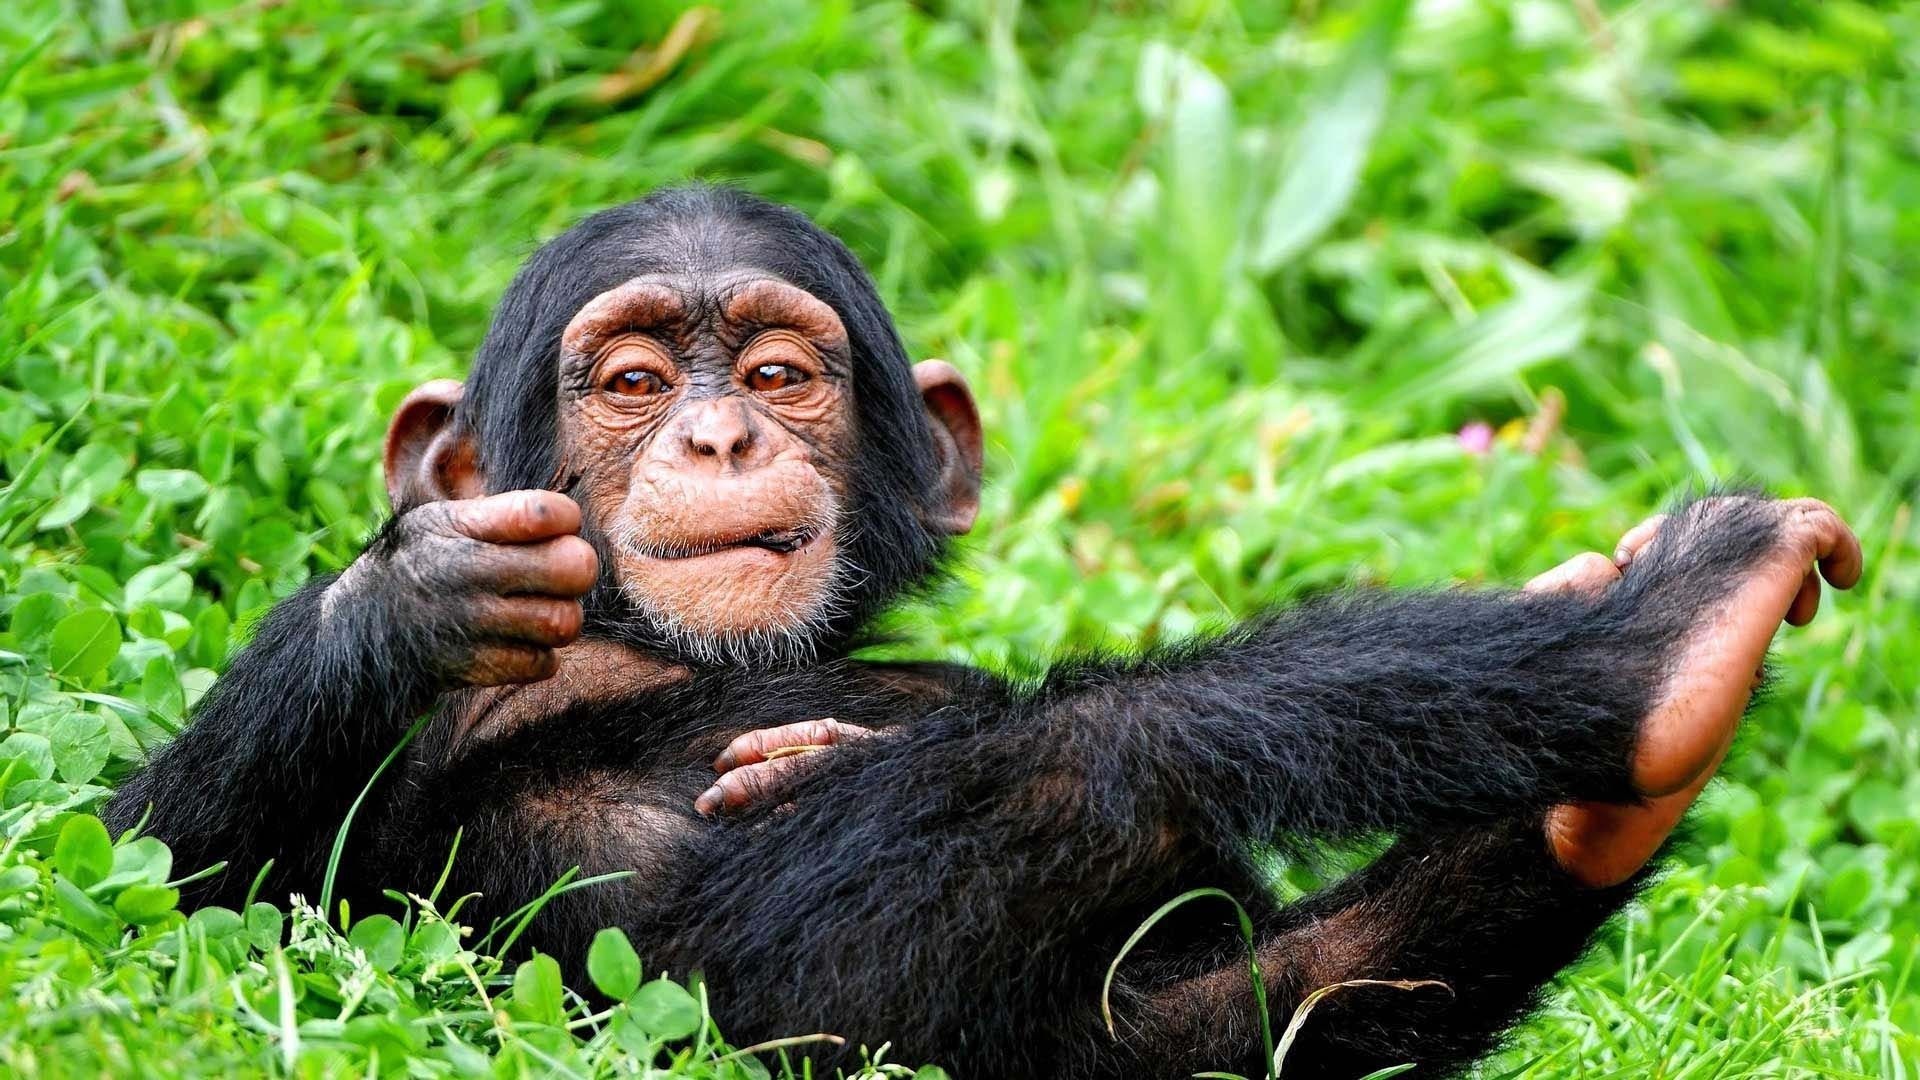 Chimpanzee in the wild, Chimpanzee close-up, Primate intelligence, Jungle habitat, 1920x1080 Full HD Desktop